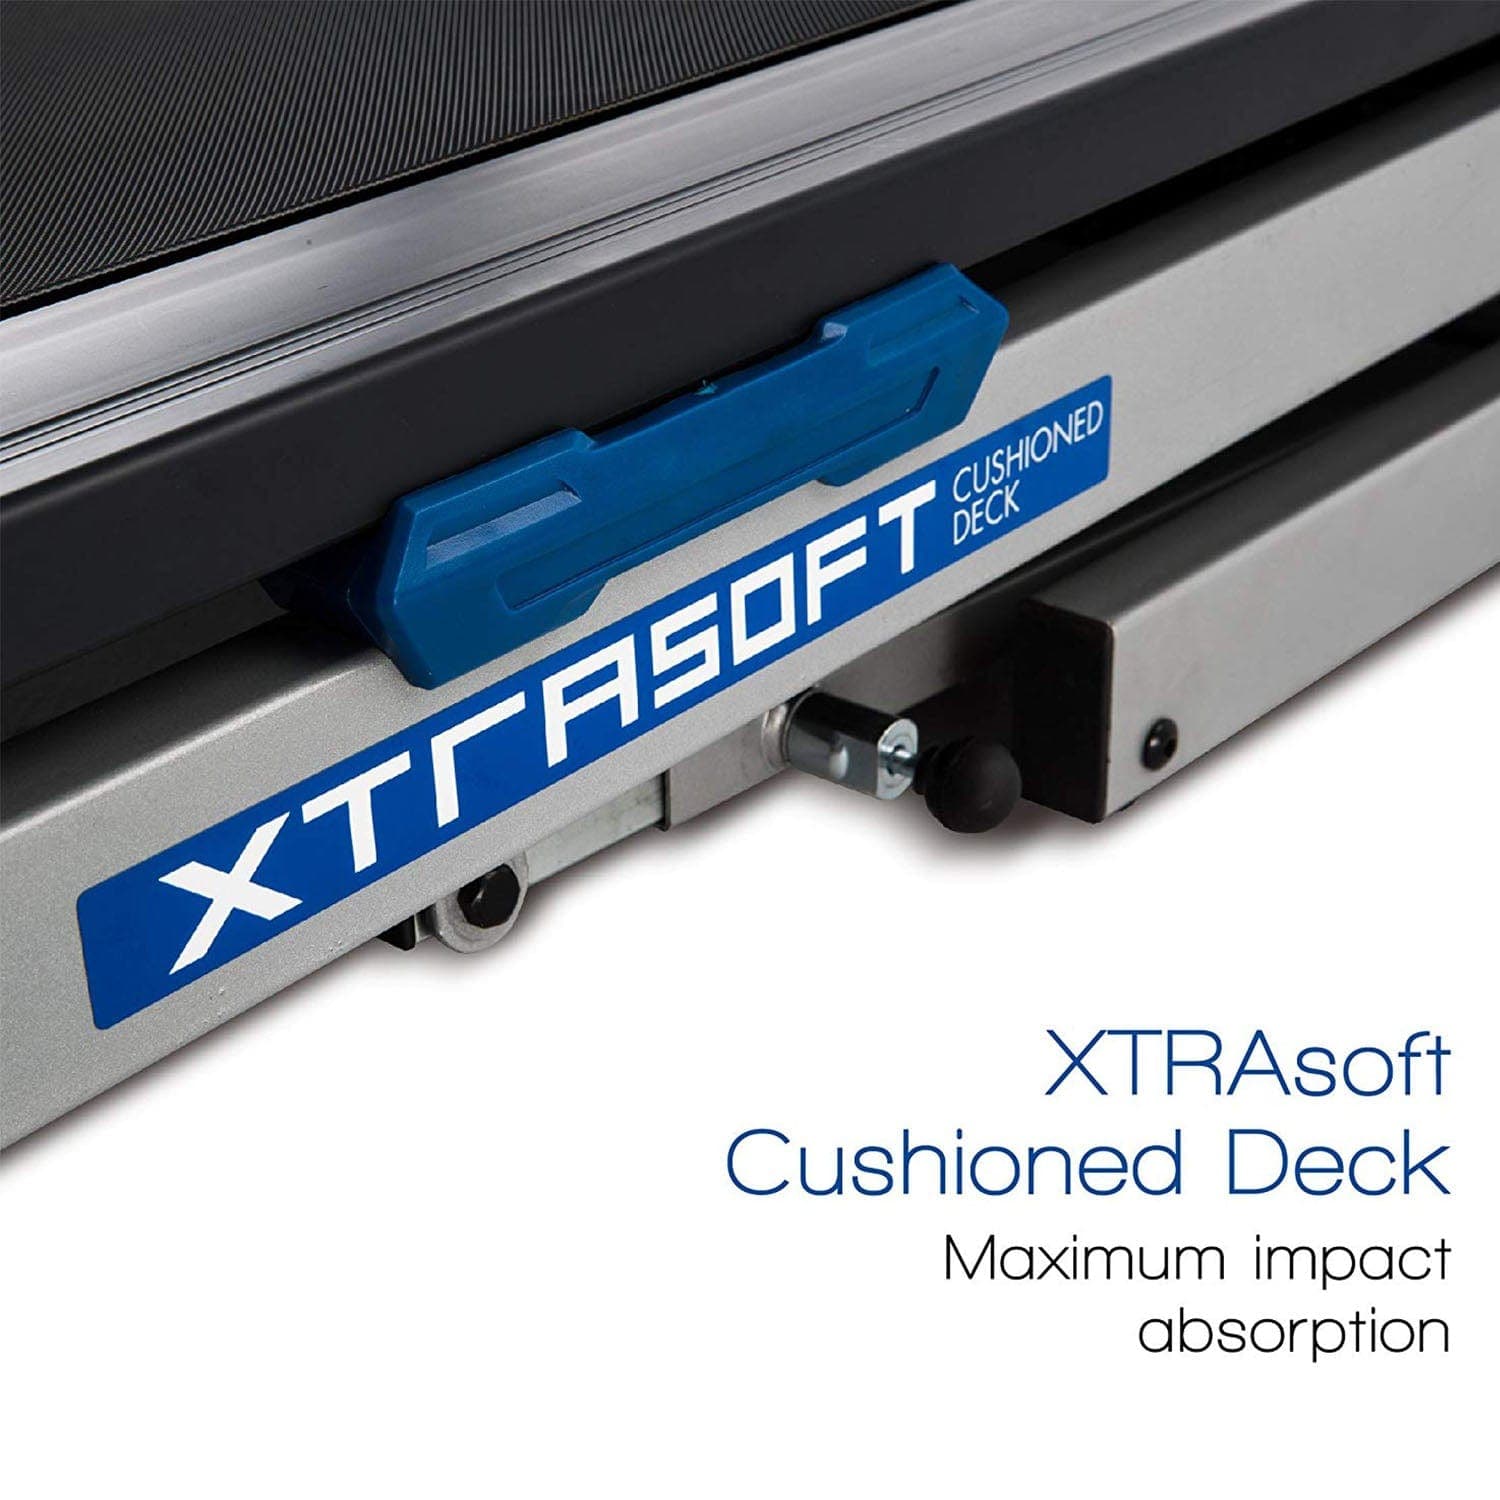 ARGT XTERRA Fitness TRX2500 Home Use Folding Treadmill